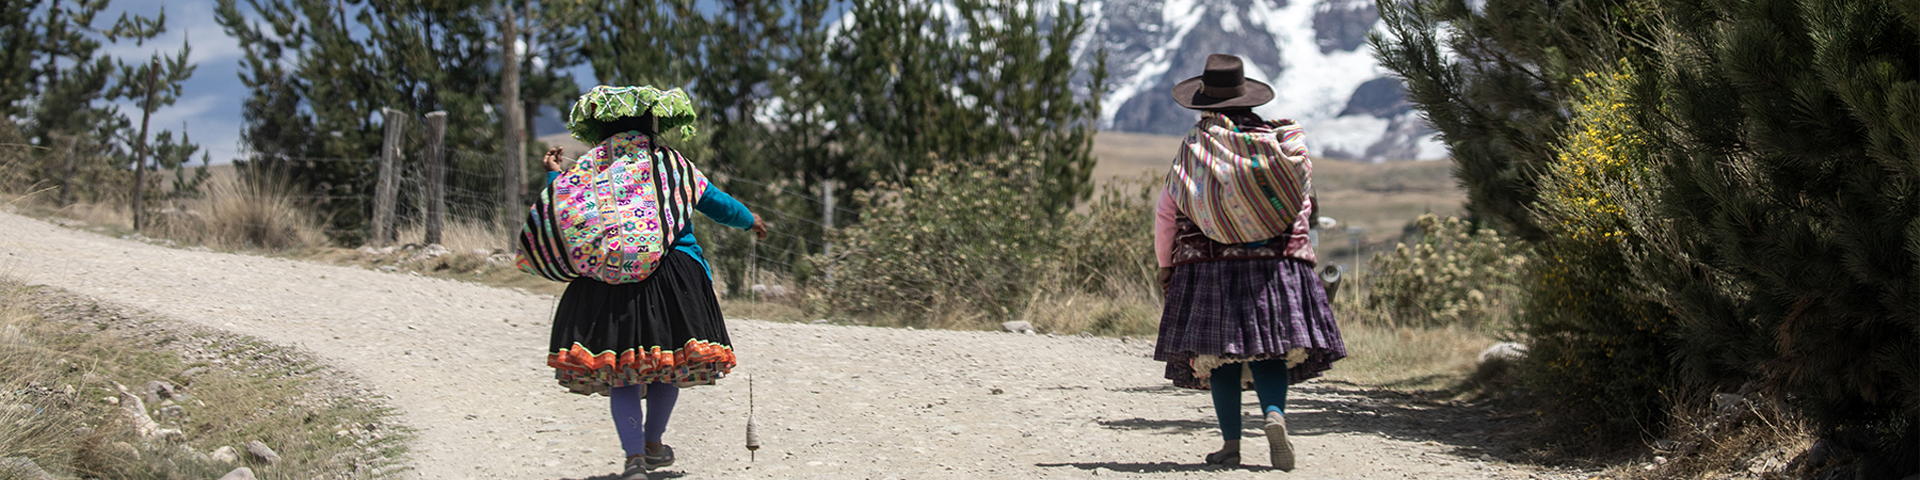 Mujeres hilando fibra de alpaca de camino a casa (Ocongate, Cusco (Perú)).